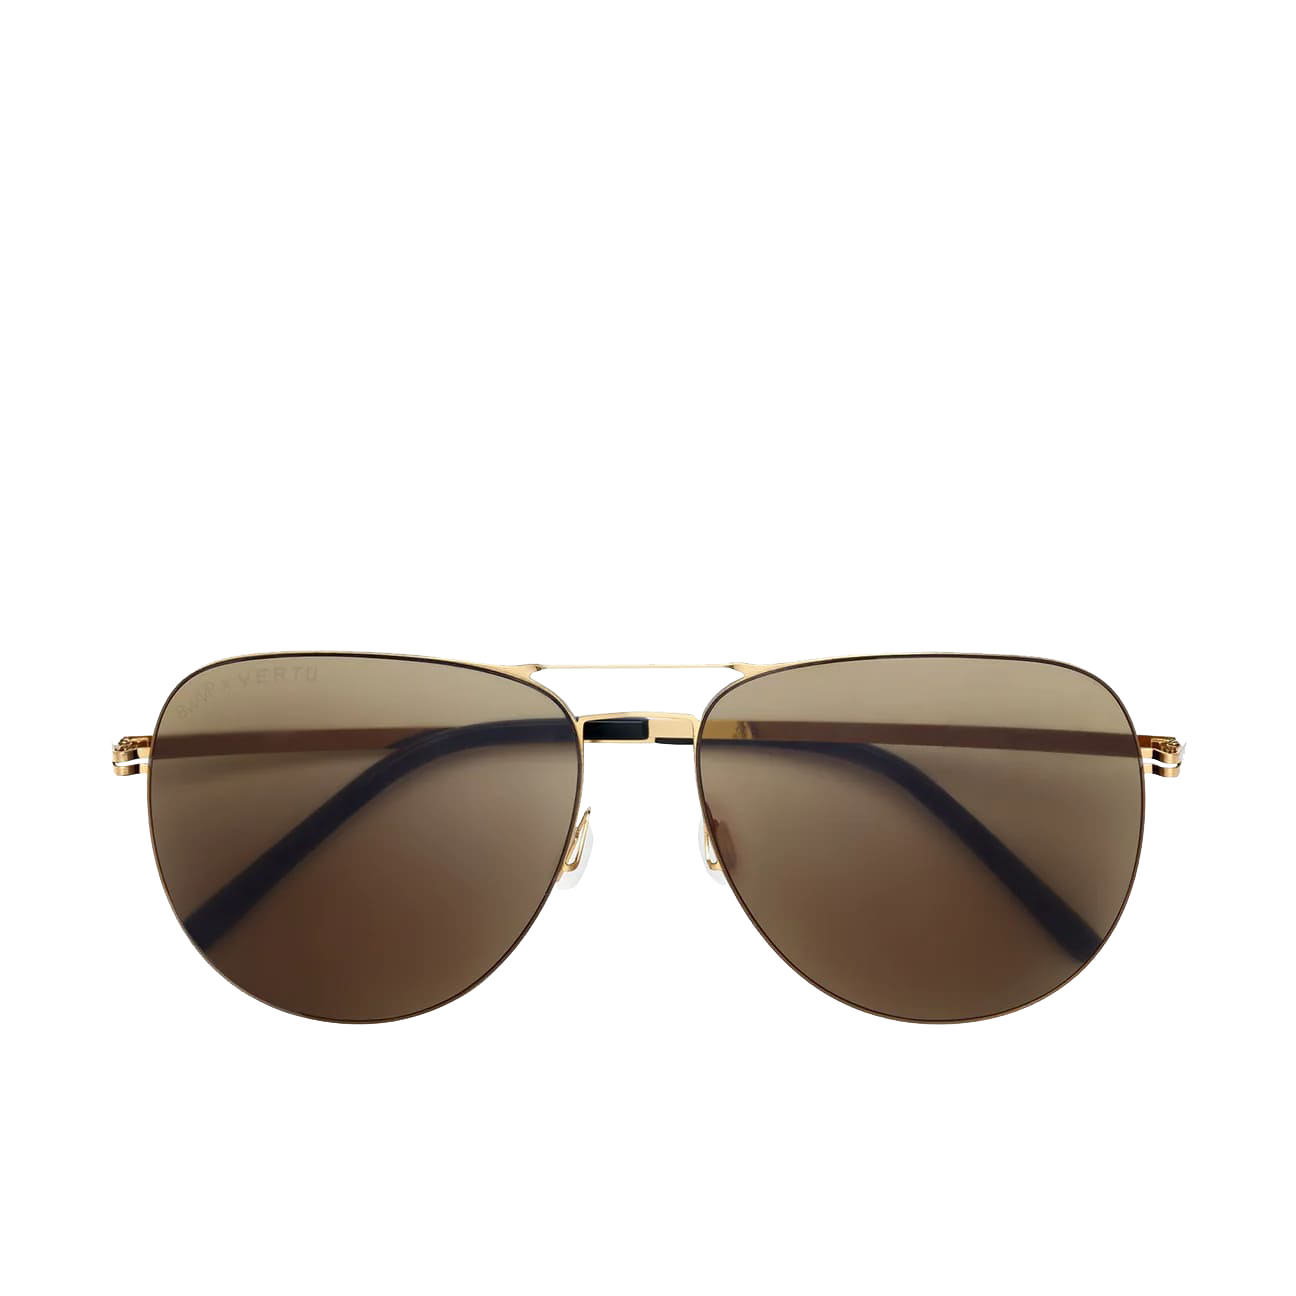 Polarized Aviator Sunglasses - Brown & Blue